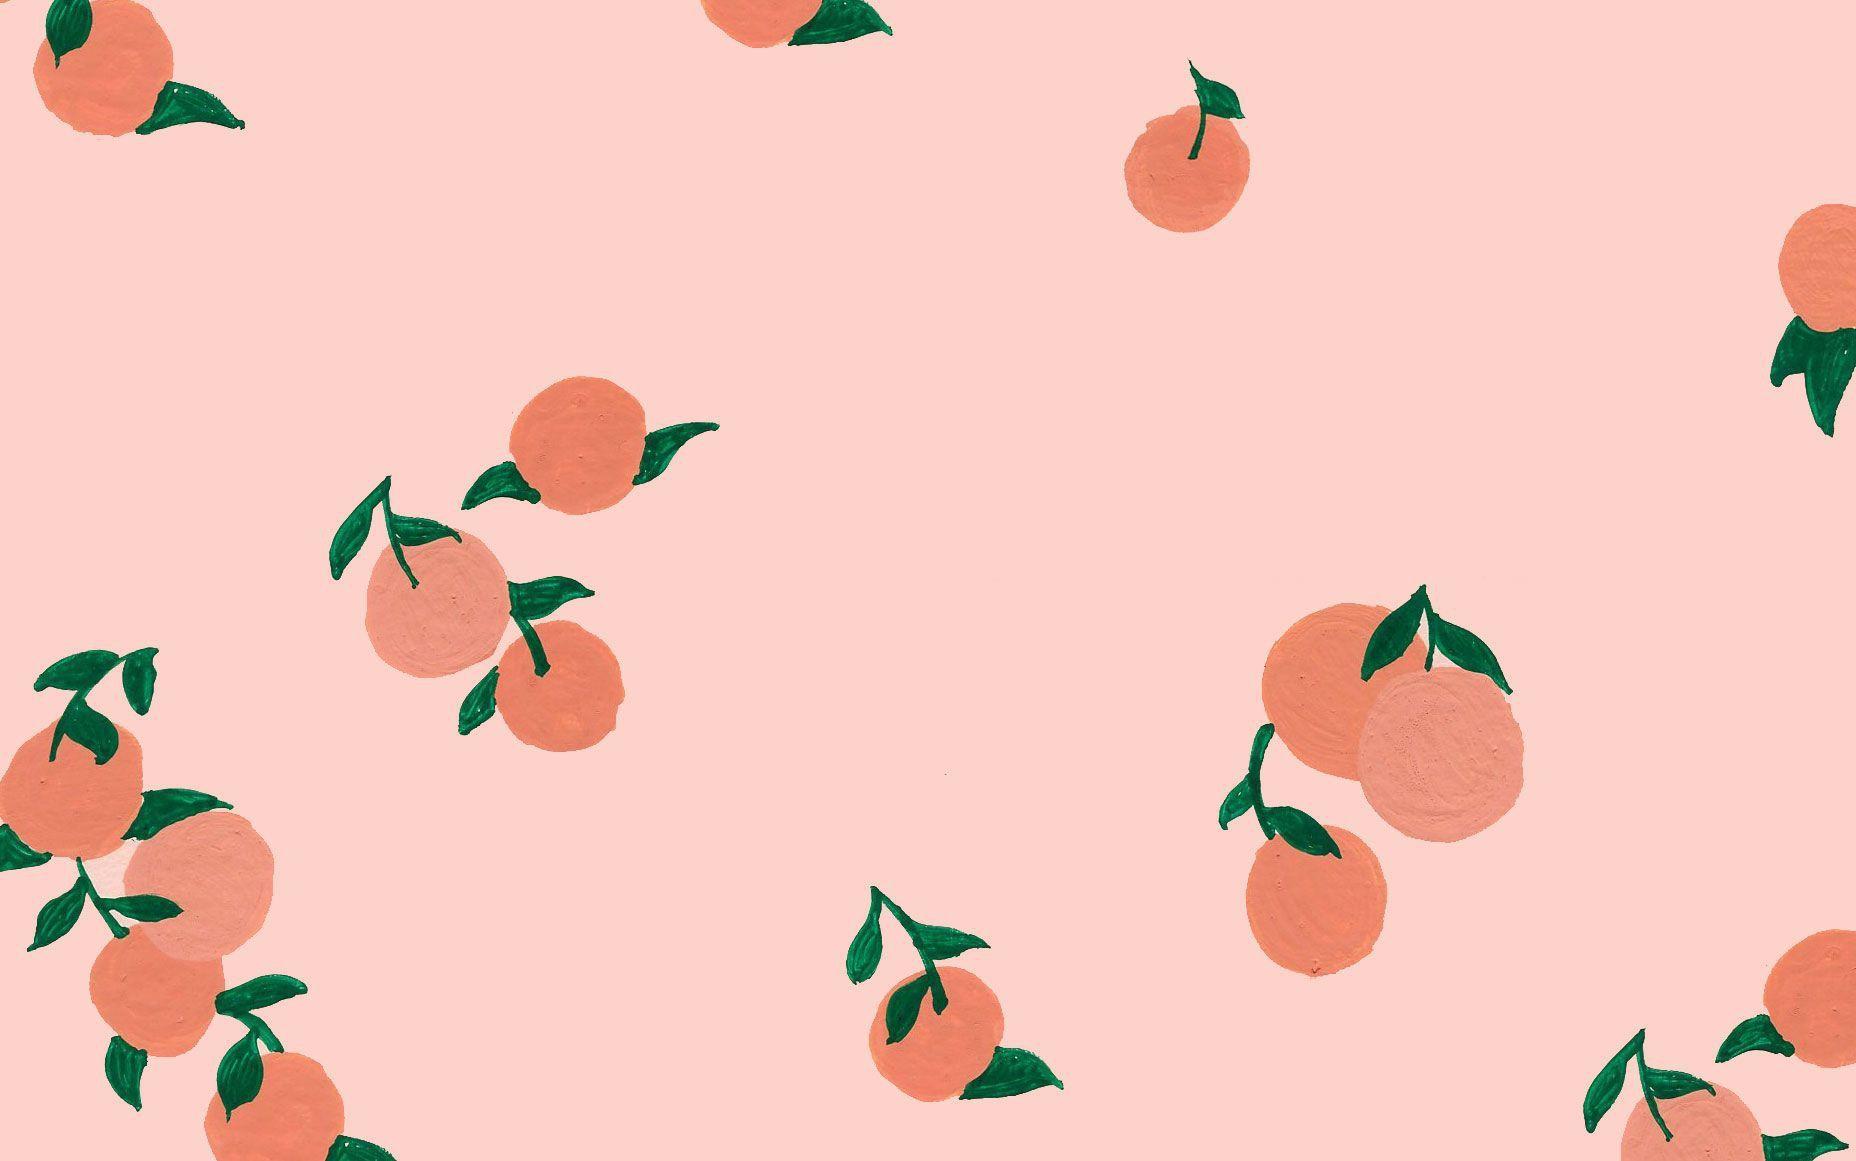 Peach Aesthetic Desktop Wallpapers - Top Hình Ảnh Đẹp